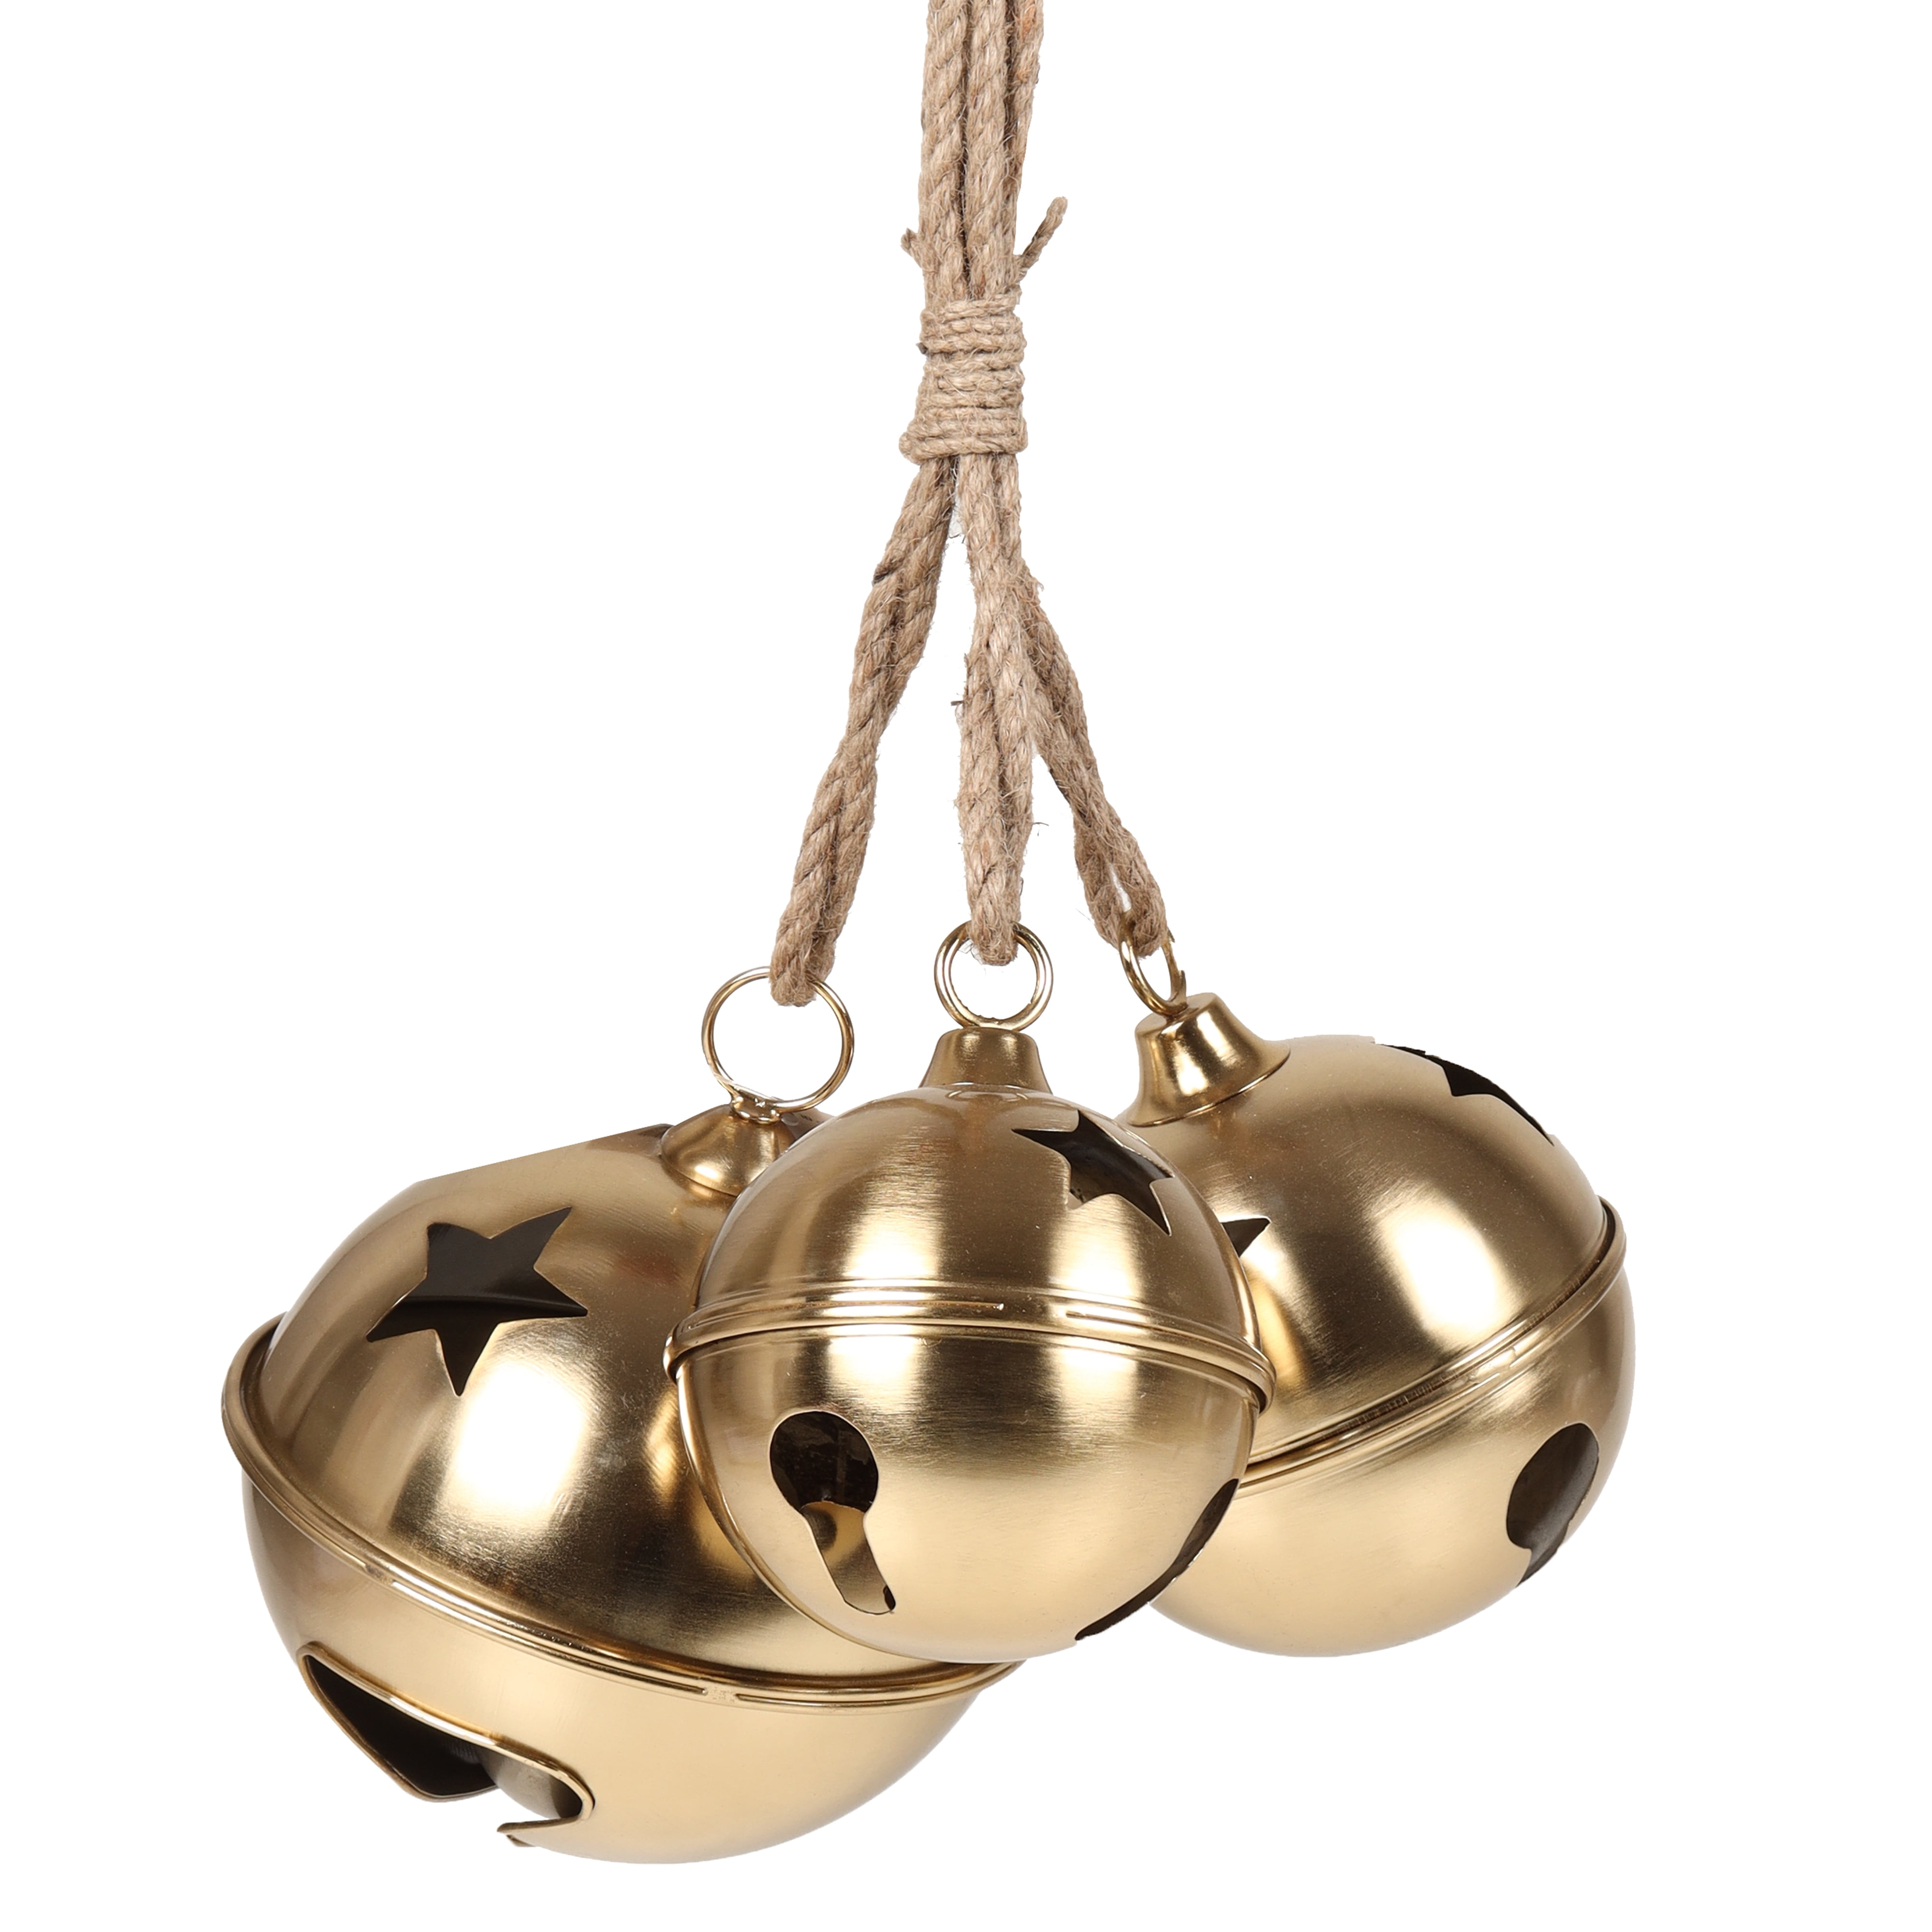 Triangular Aged Gold Hanging Bells, Set of 3